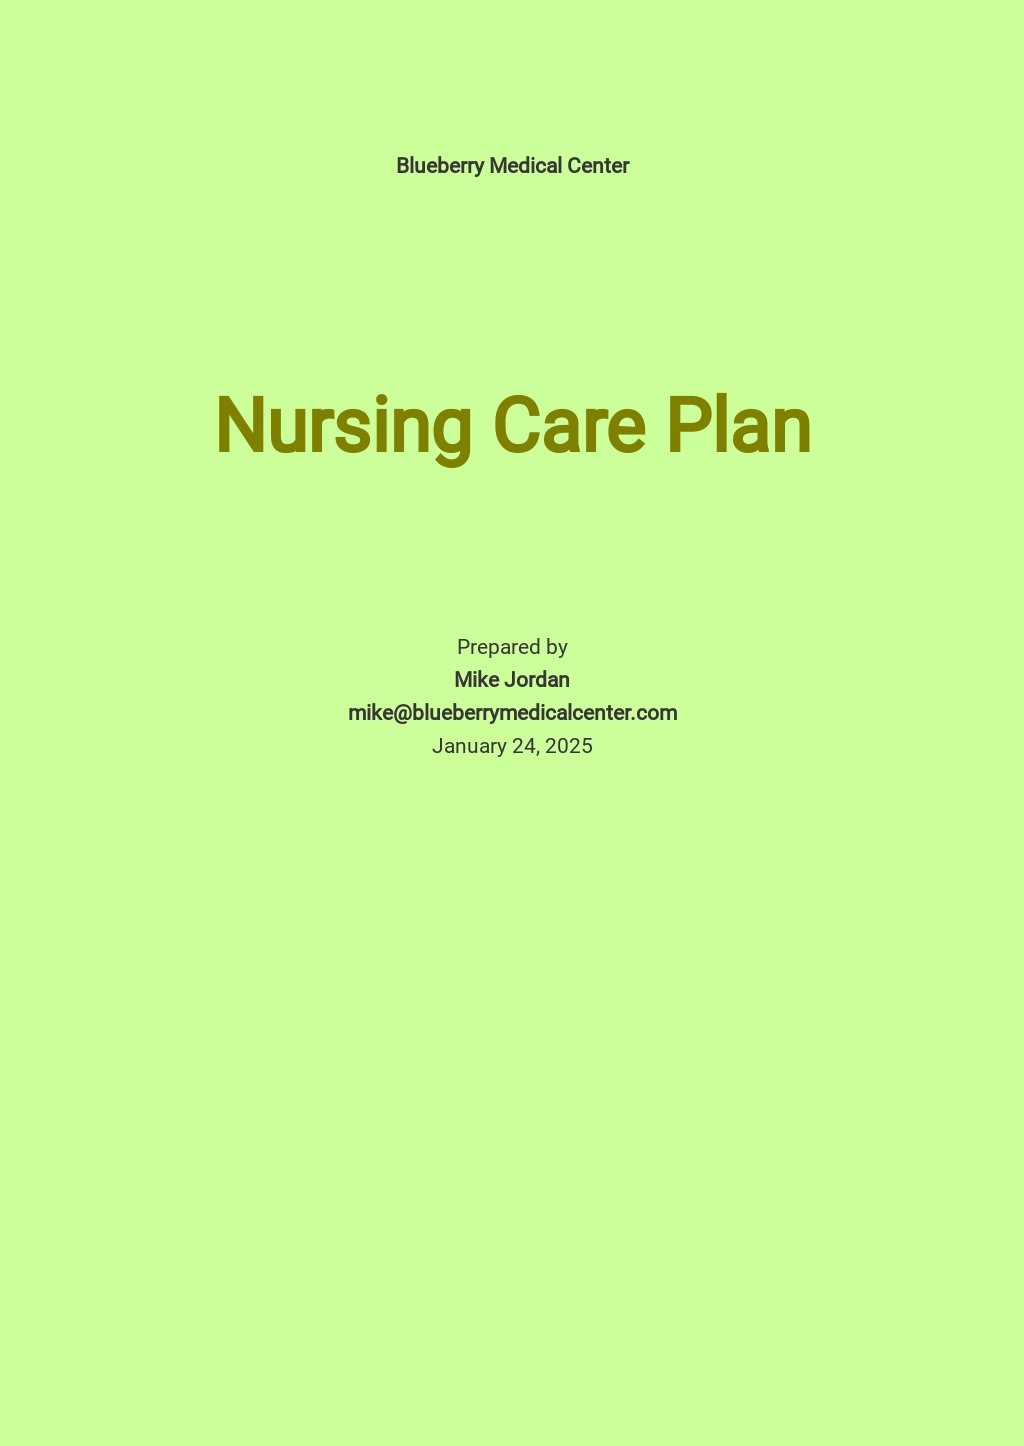 Nursing Care Plan Template.jpe